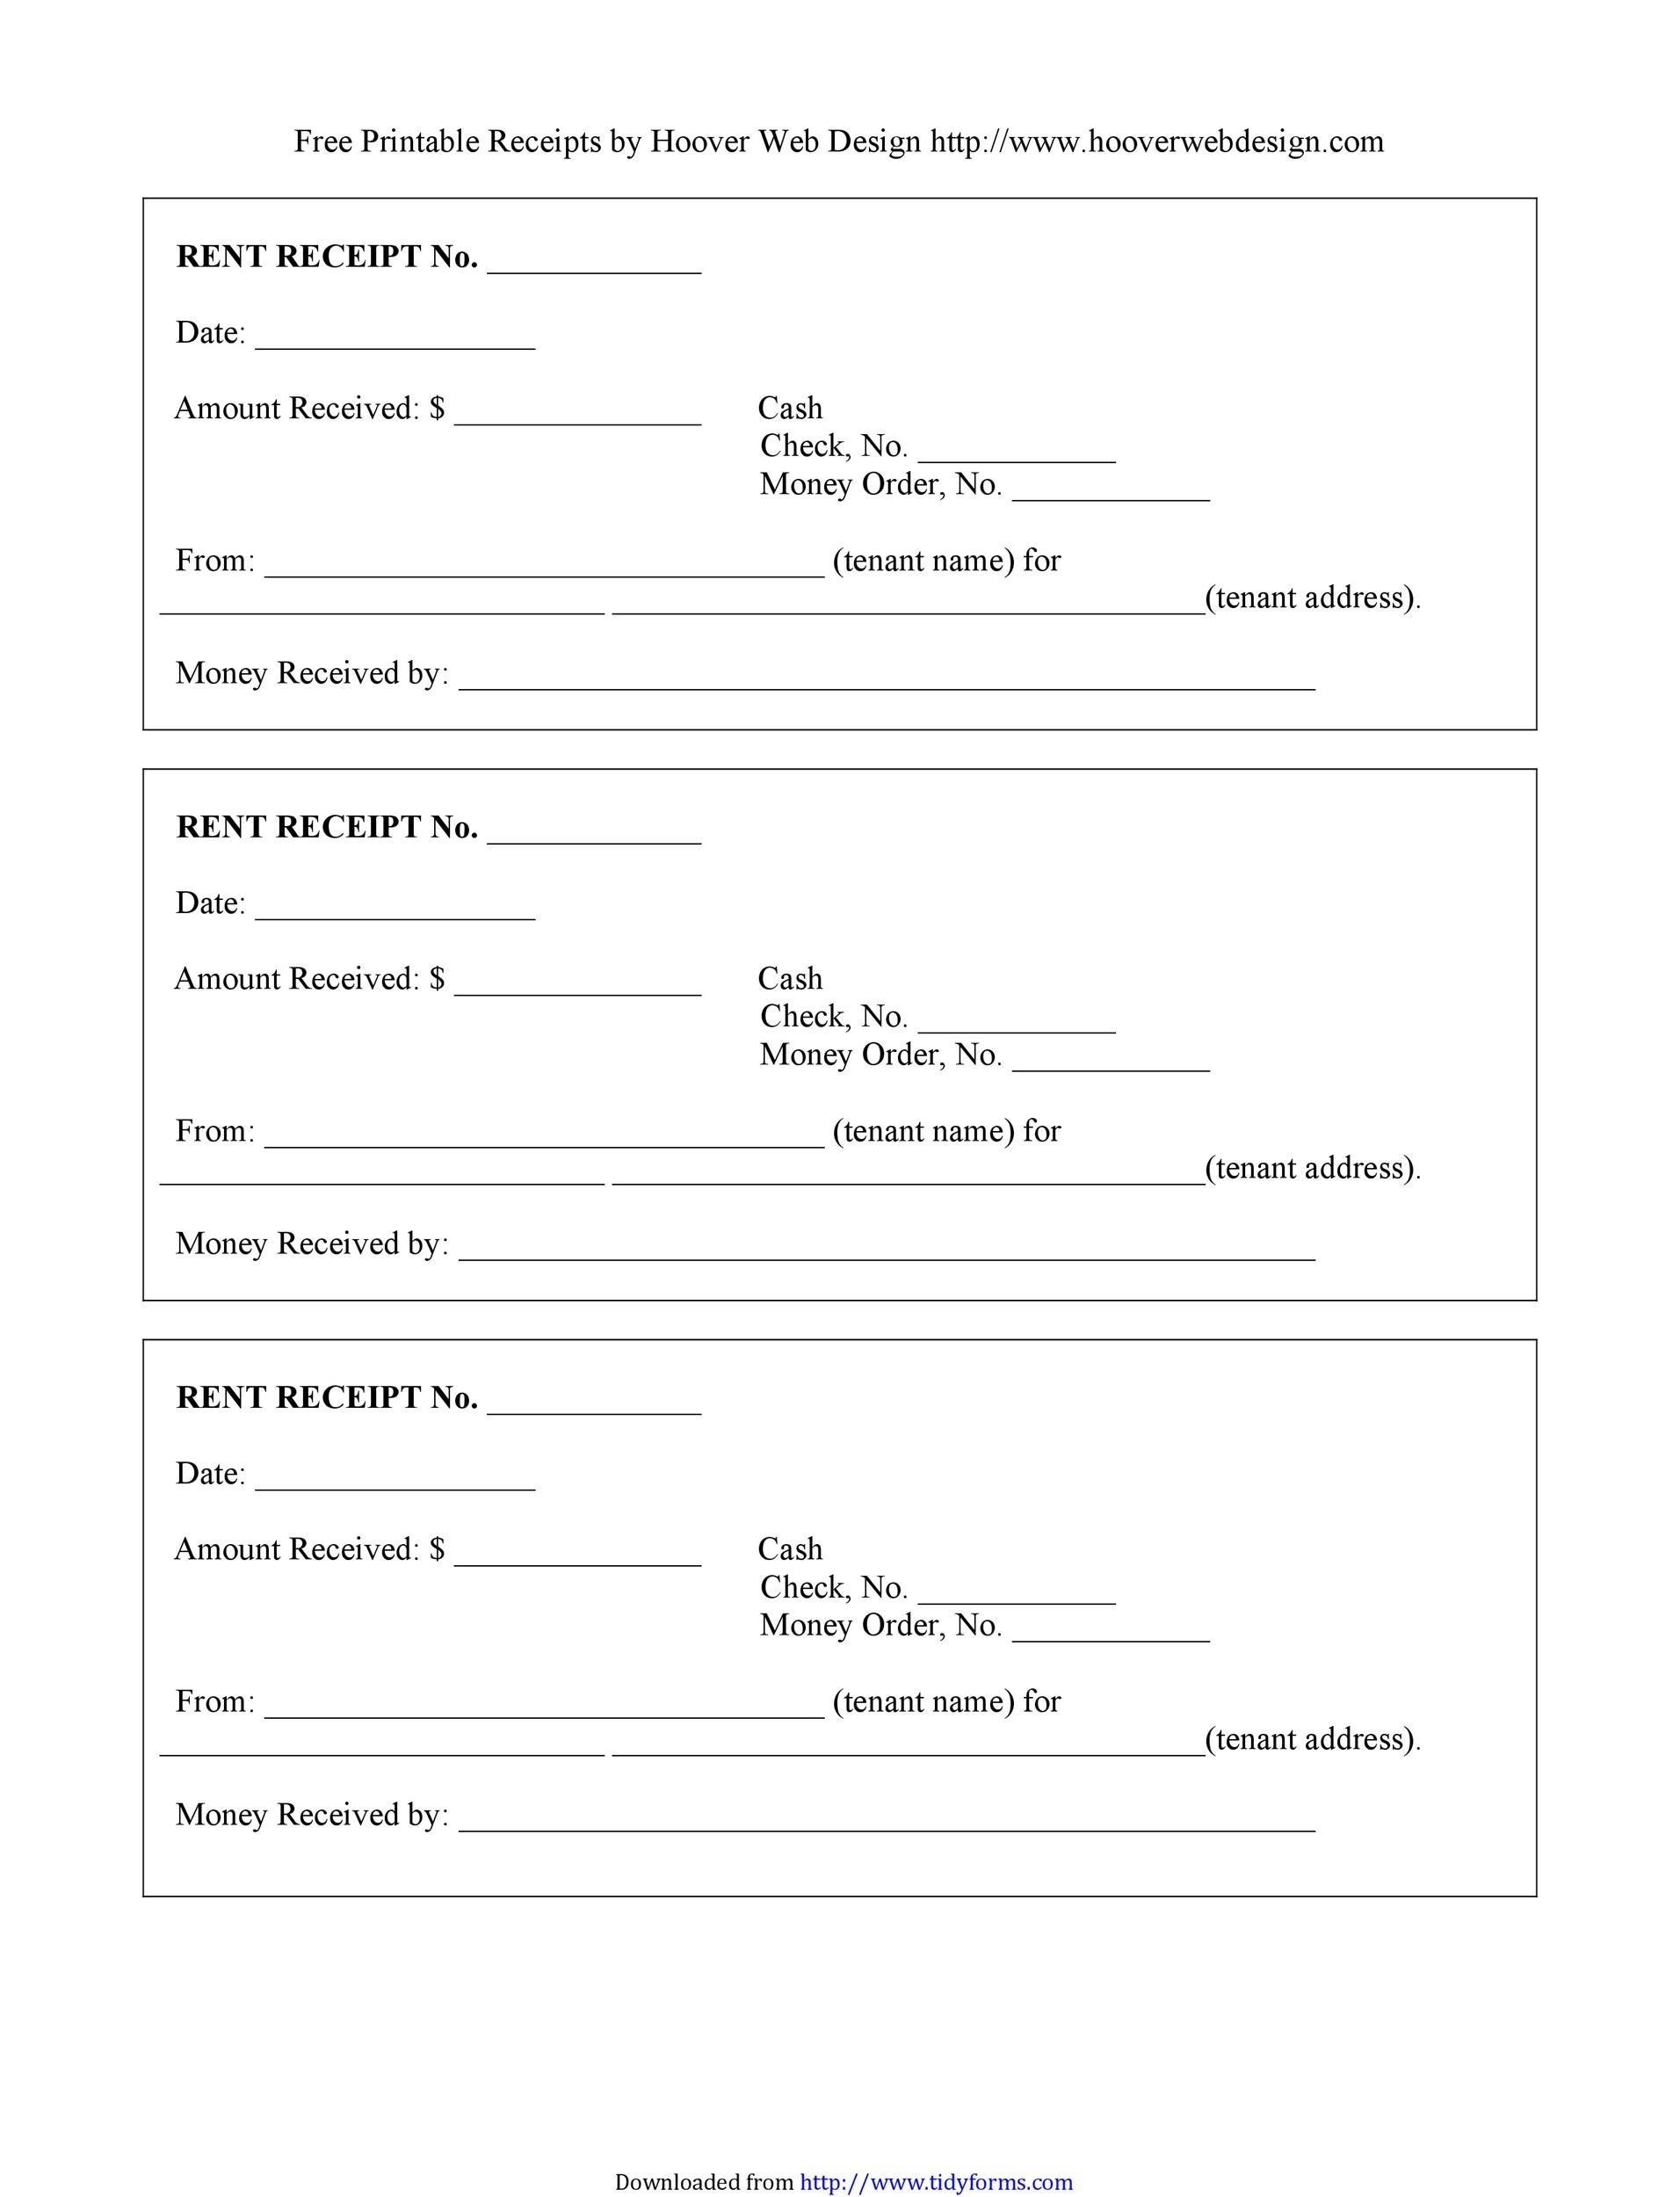 rent-receipt-format-pdf-free-download-pdf-template